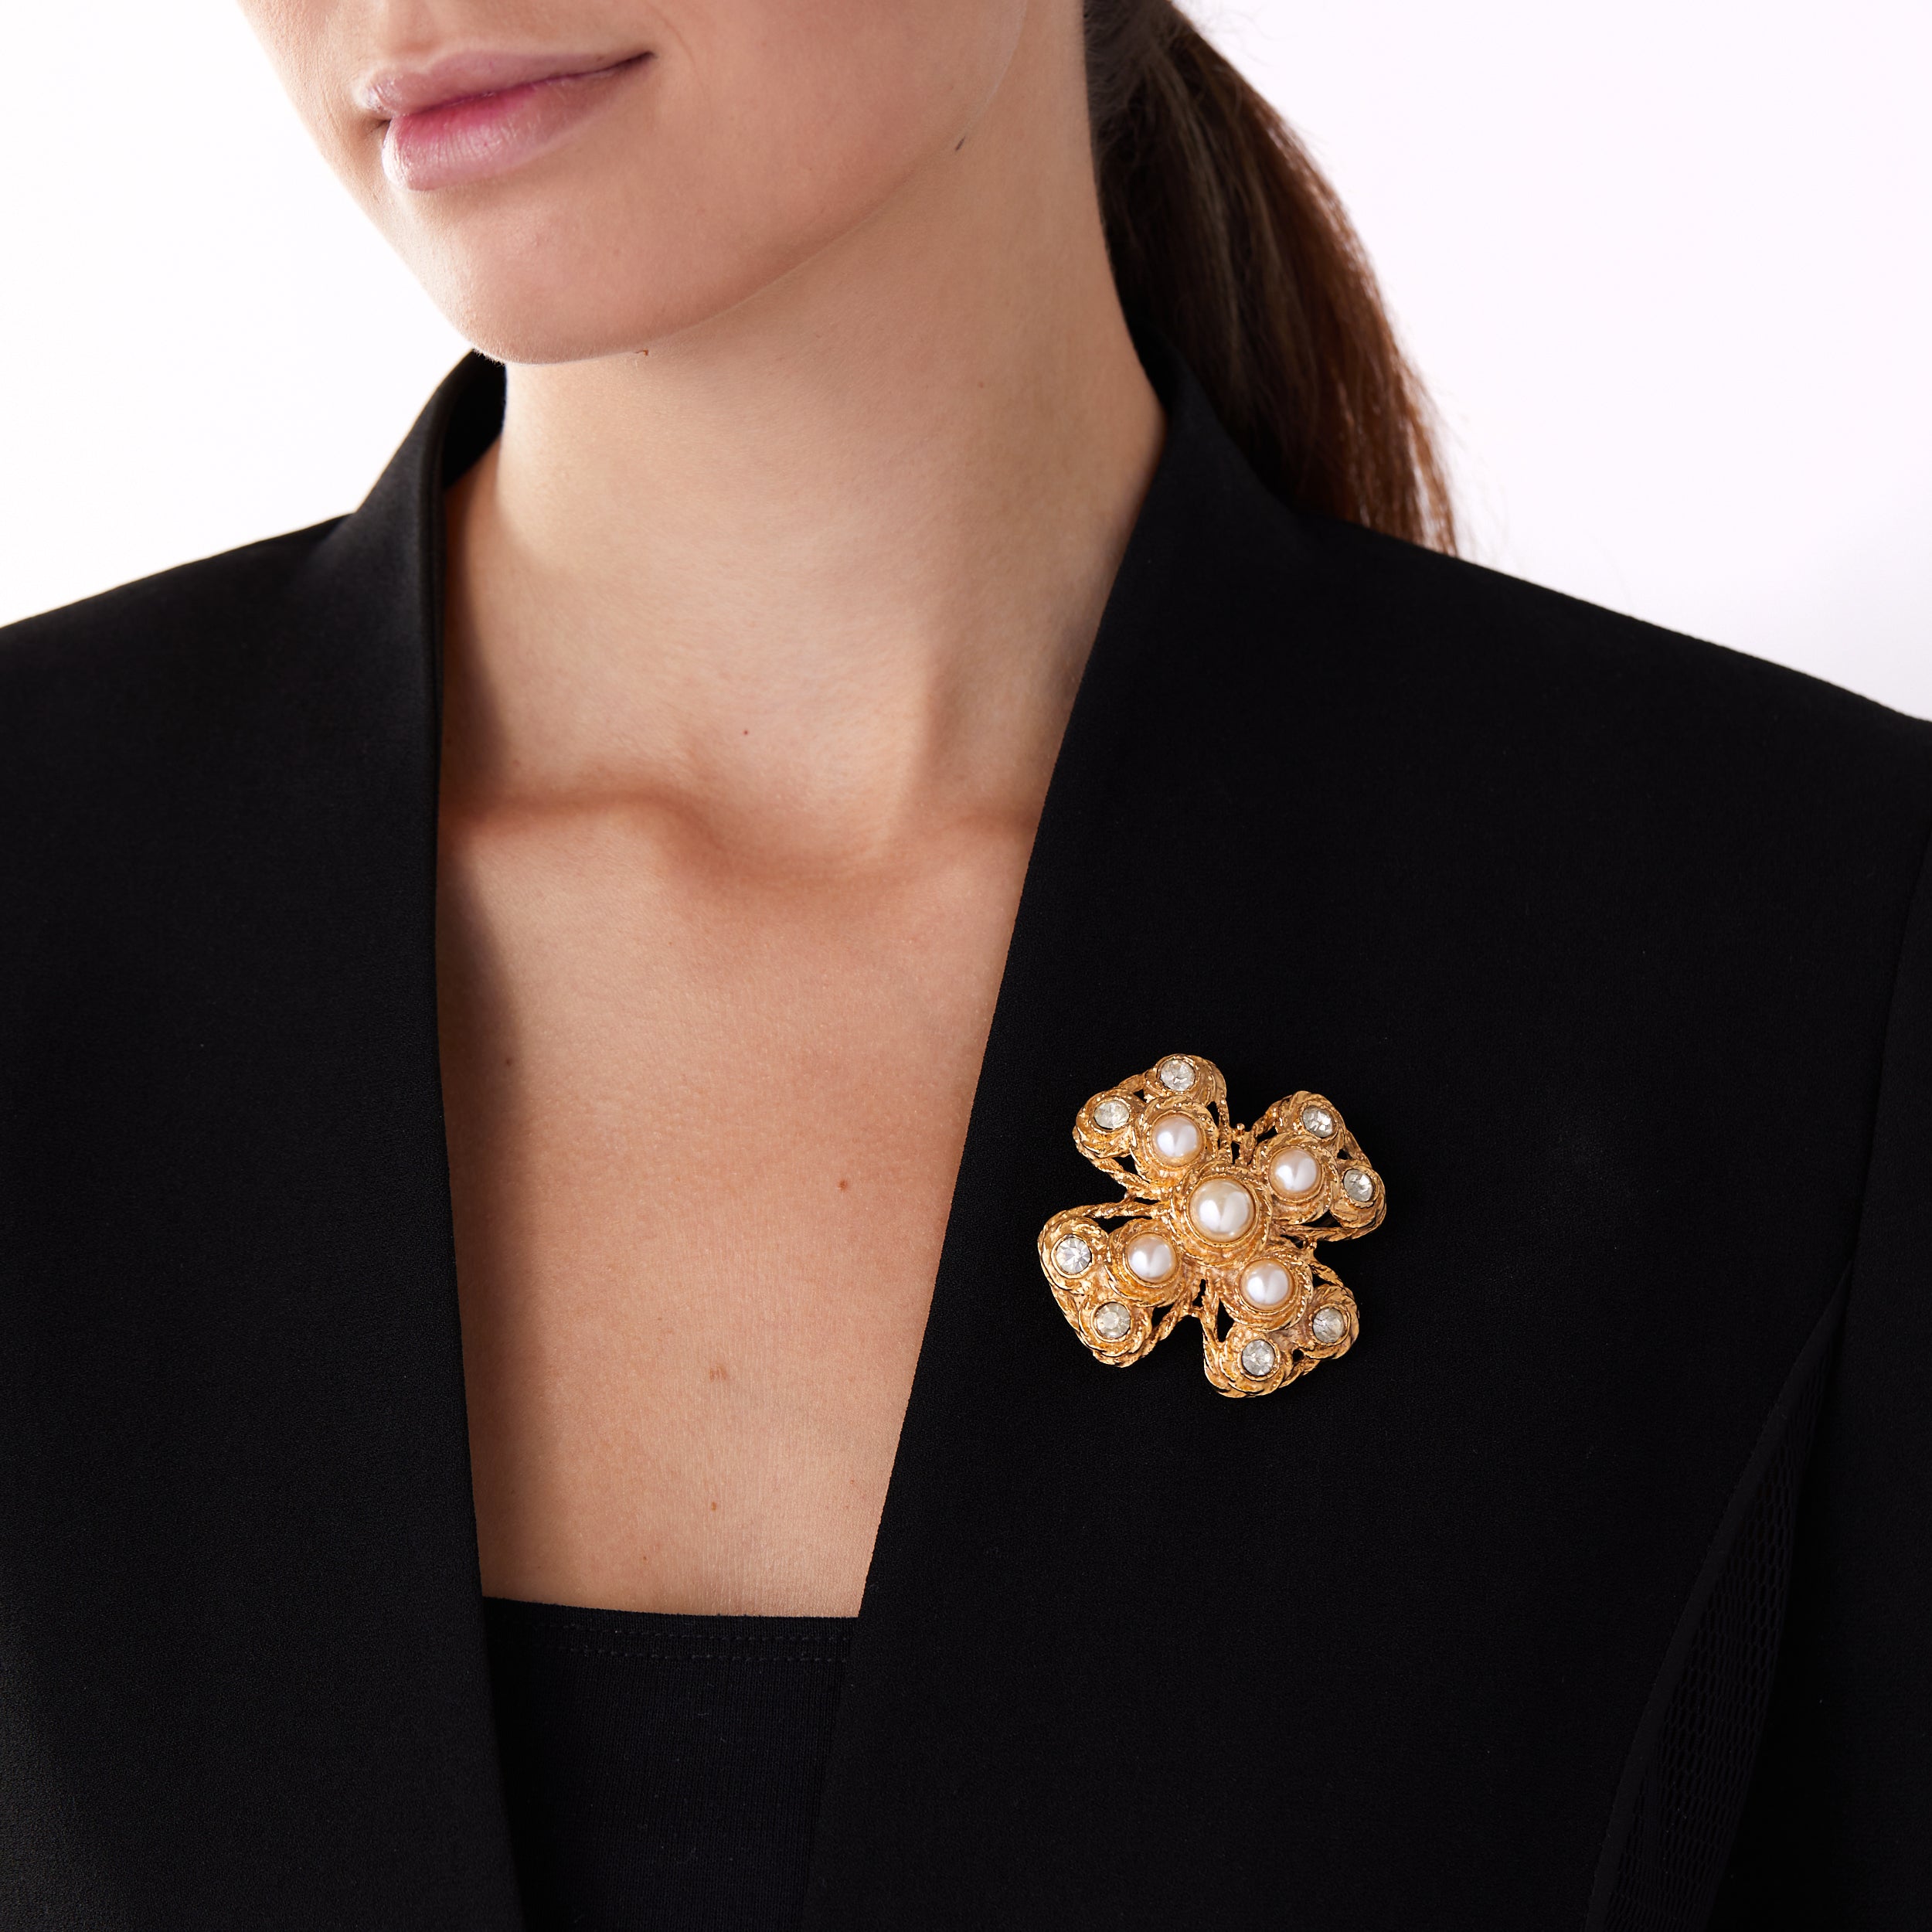 Vintage costume cross pin brooch worn on a blazer lapel